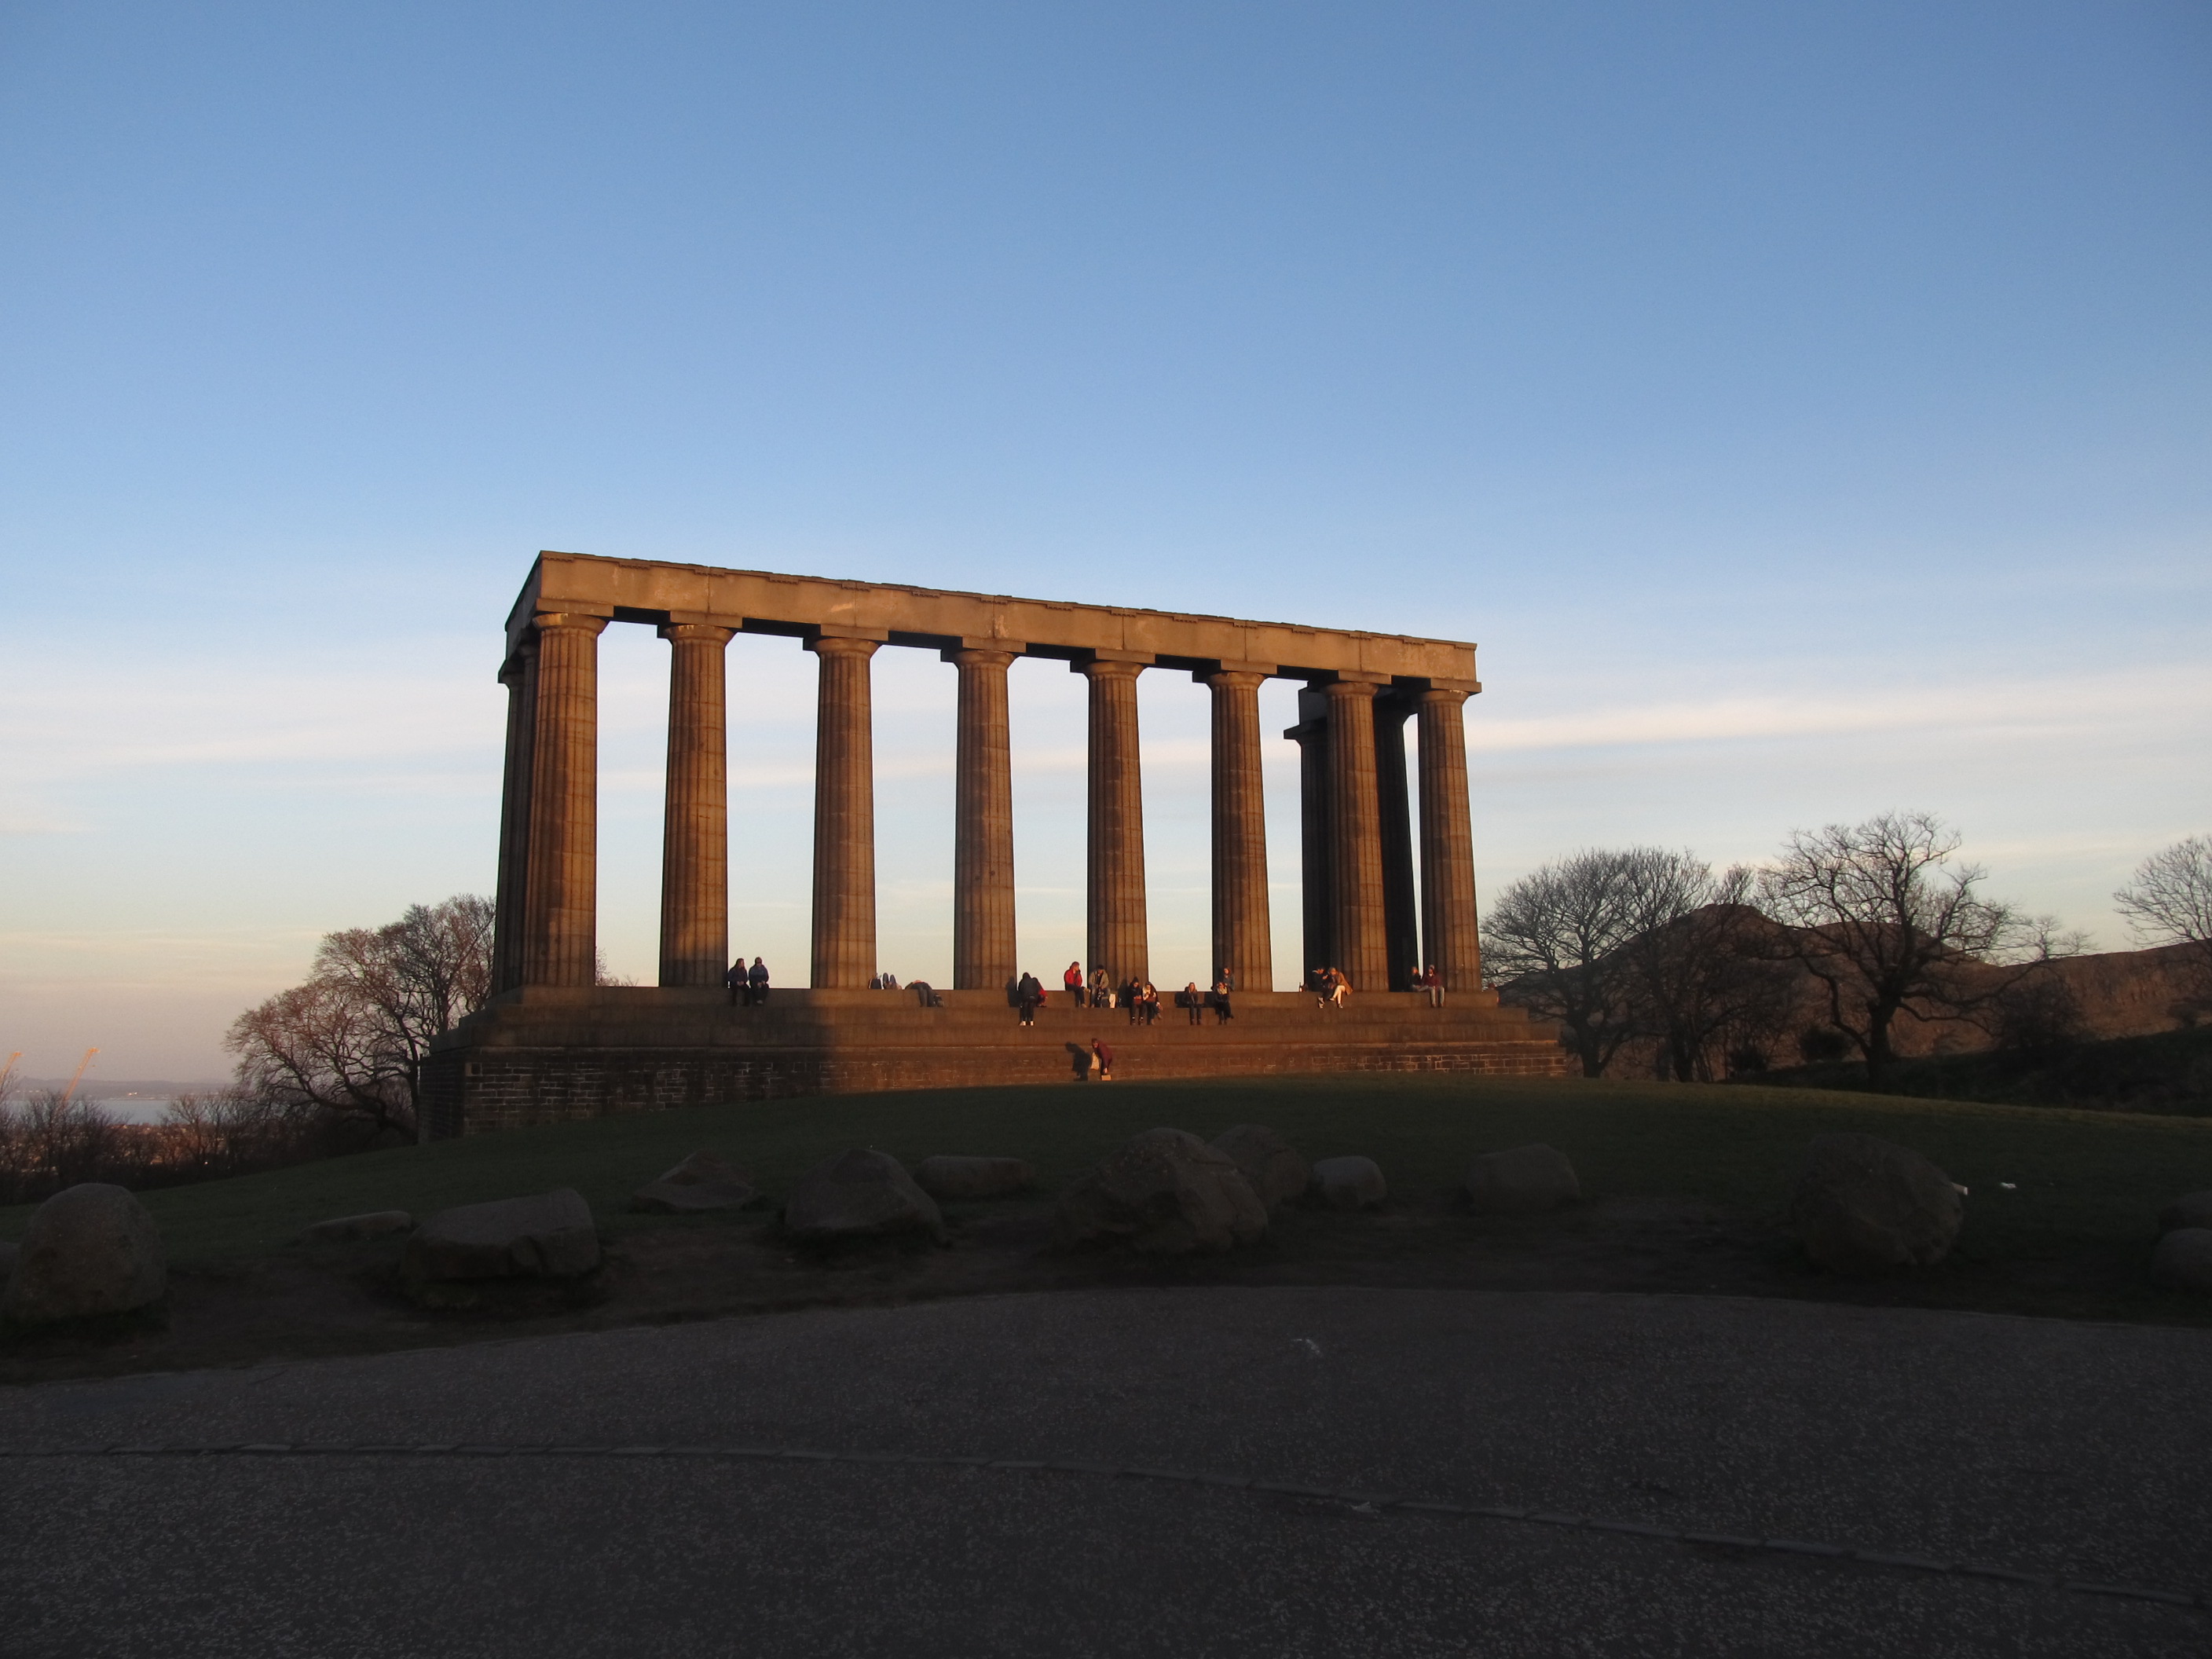 The National Monument in Edinburgh, Calton Hill